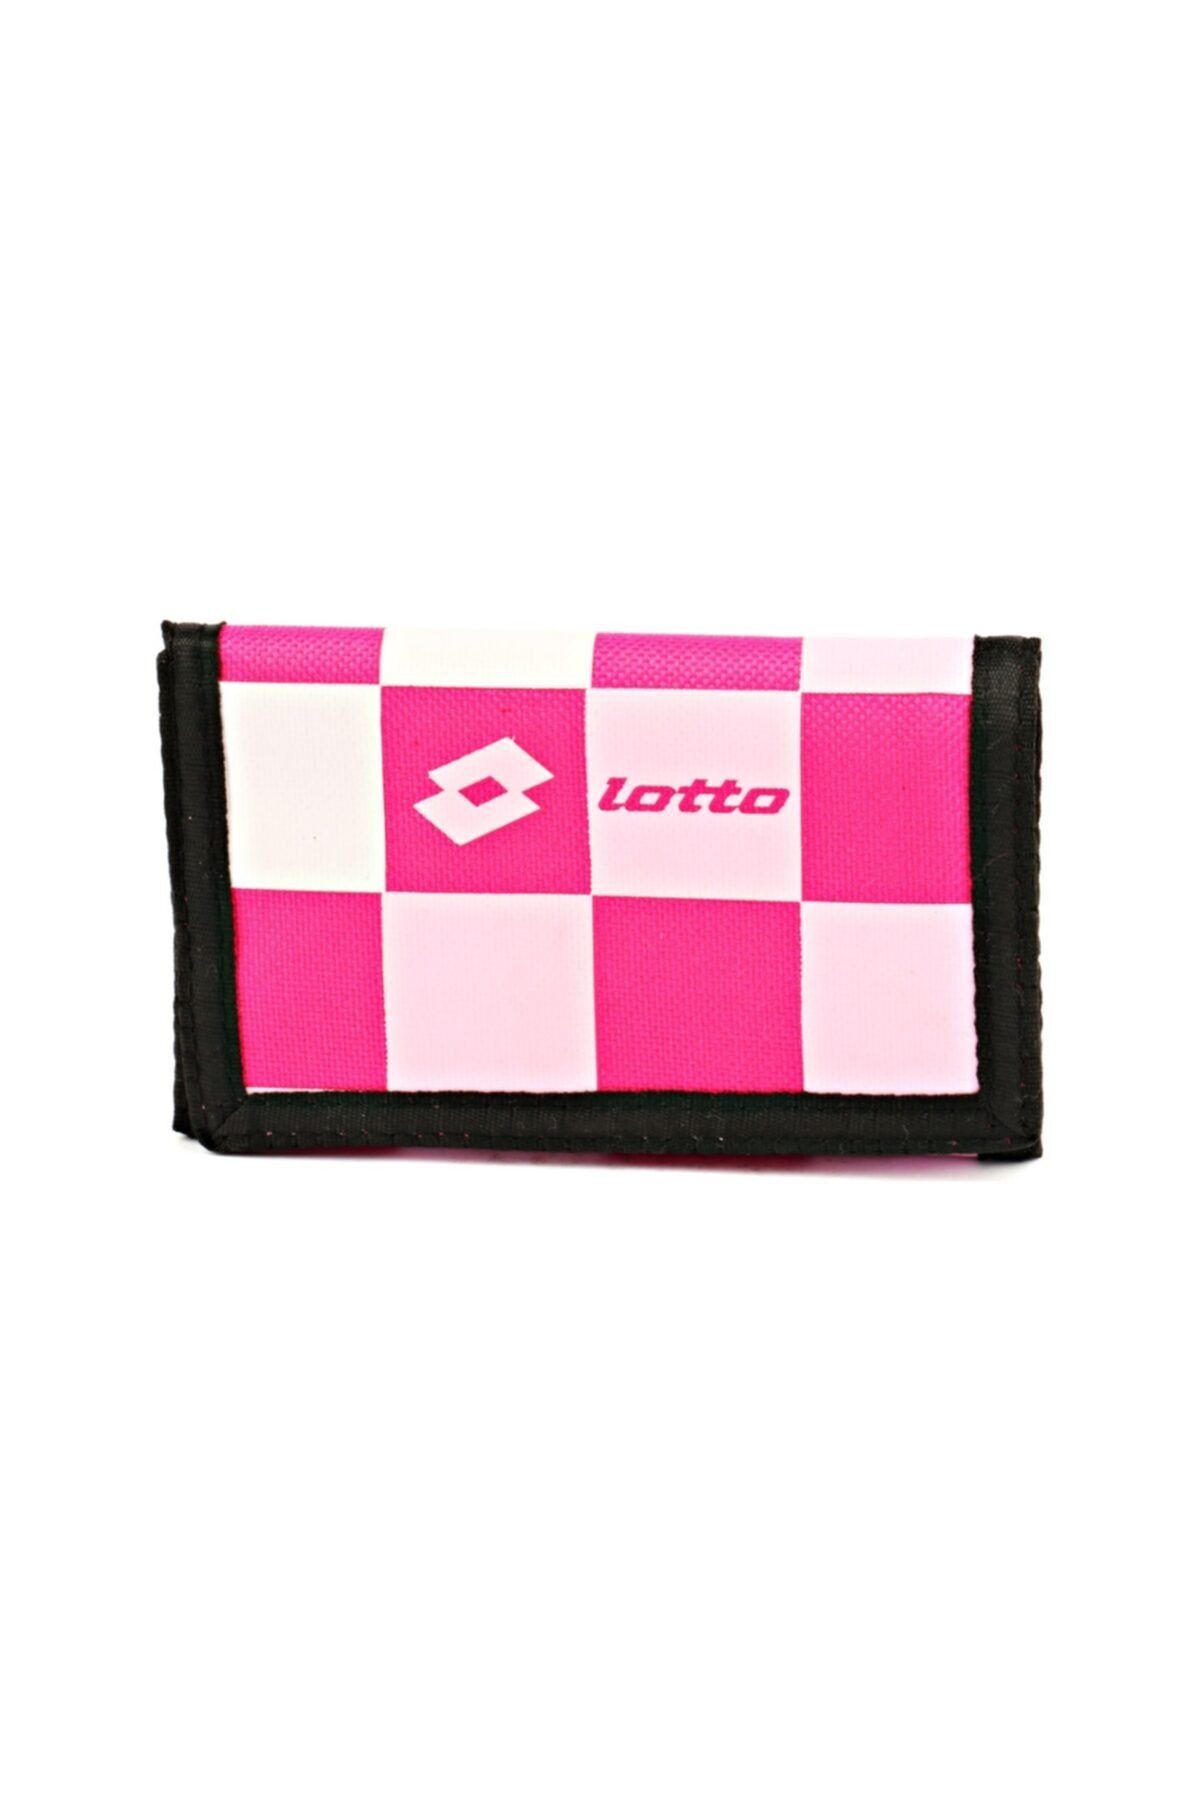 Lotto Wallet Martin N2521 Pembe Spor Cüzdan